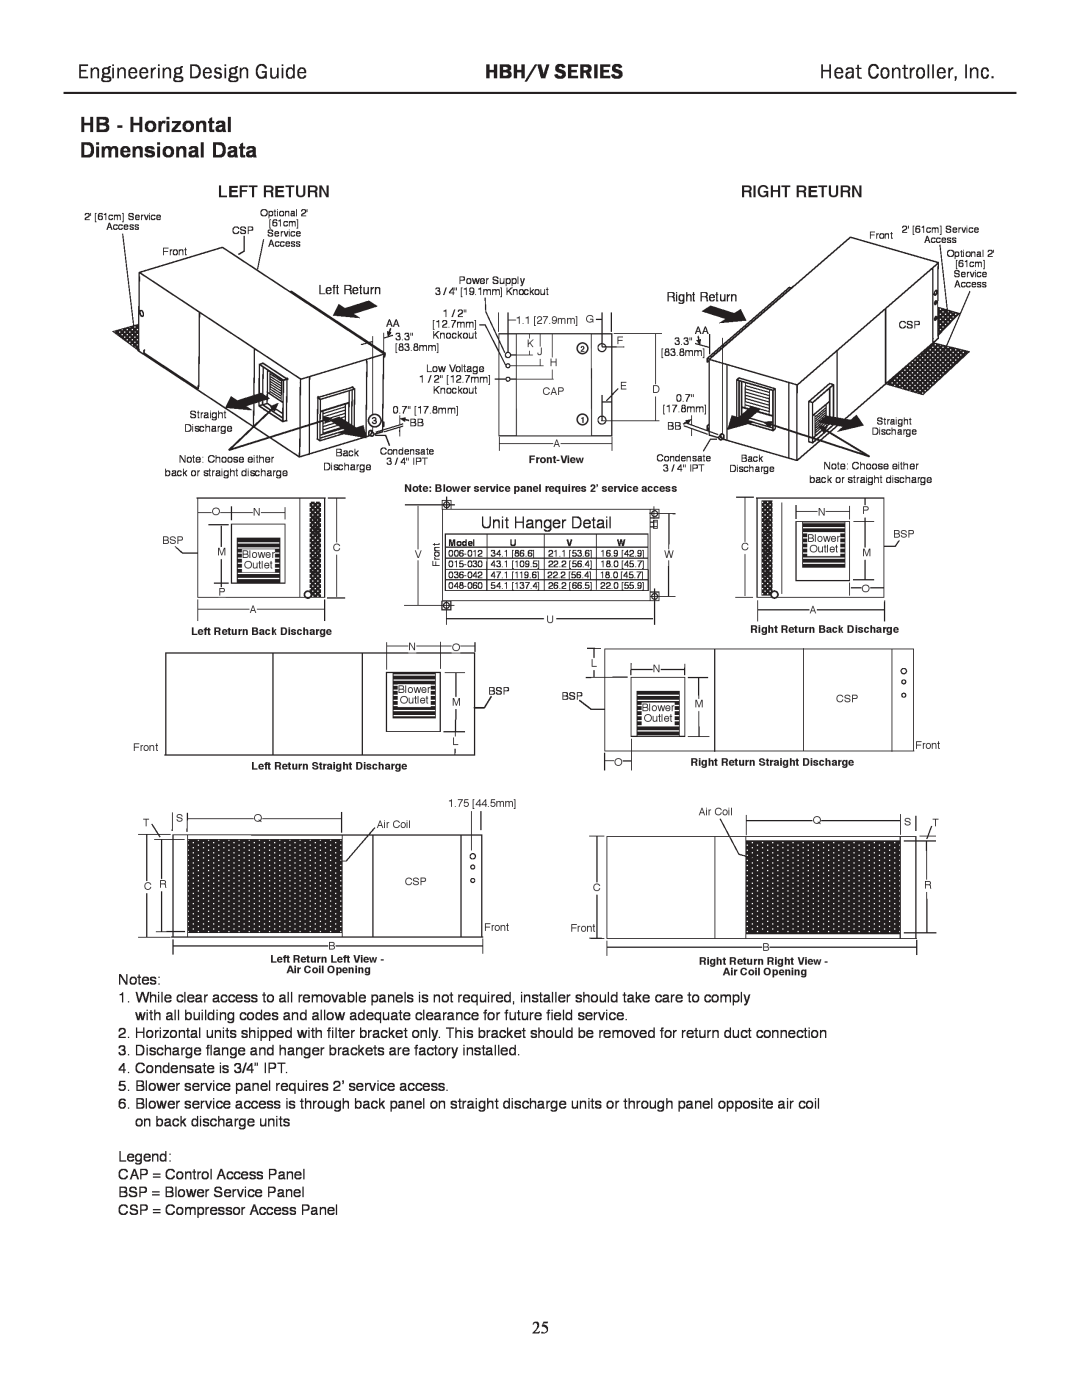 Heat Controller HBH/V HB - Horizontal, Dimensional Data, Engineering Design Guide, Hbh/V Series, Heat Controller, Inc 